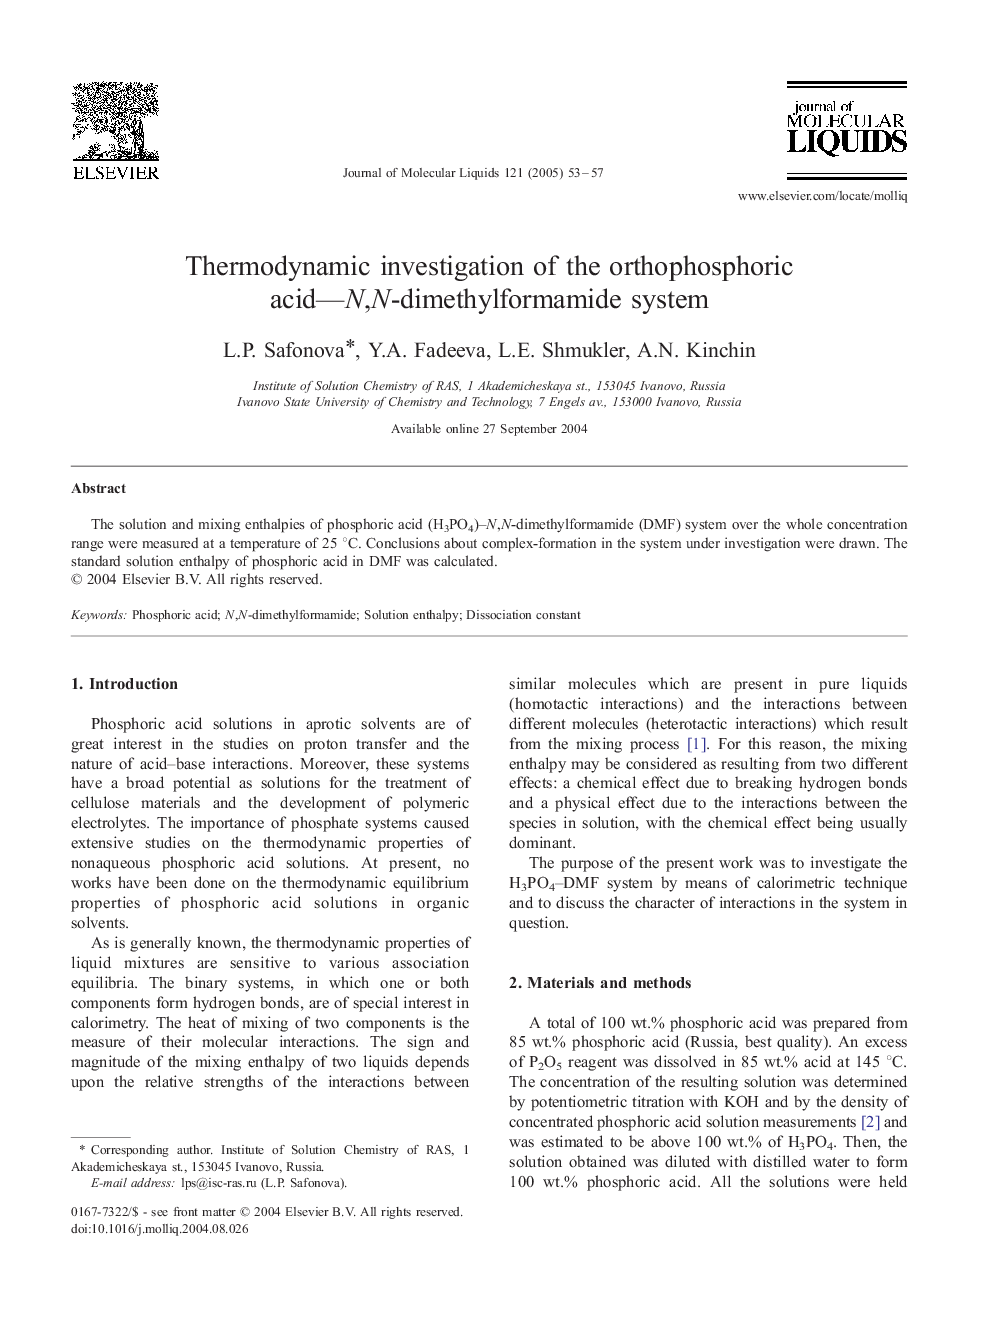 Thermodynamic investigation of the orthophosphoric acid-N,N-dimethylformamide system